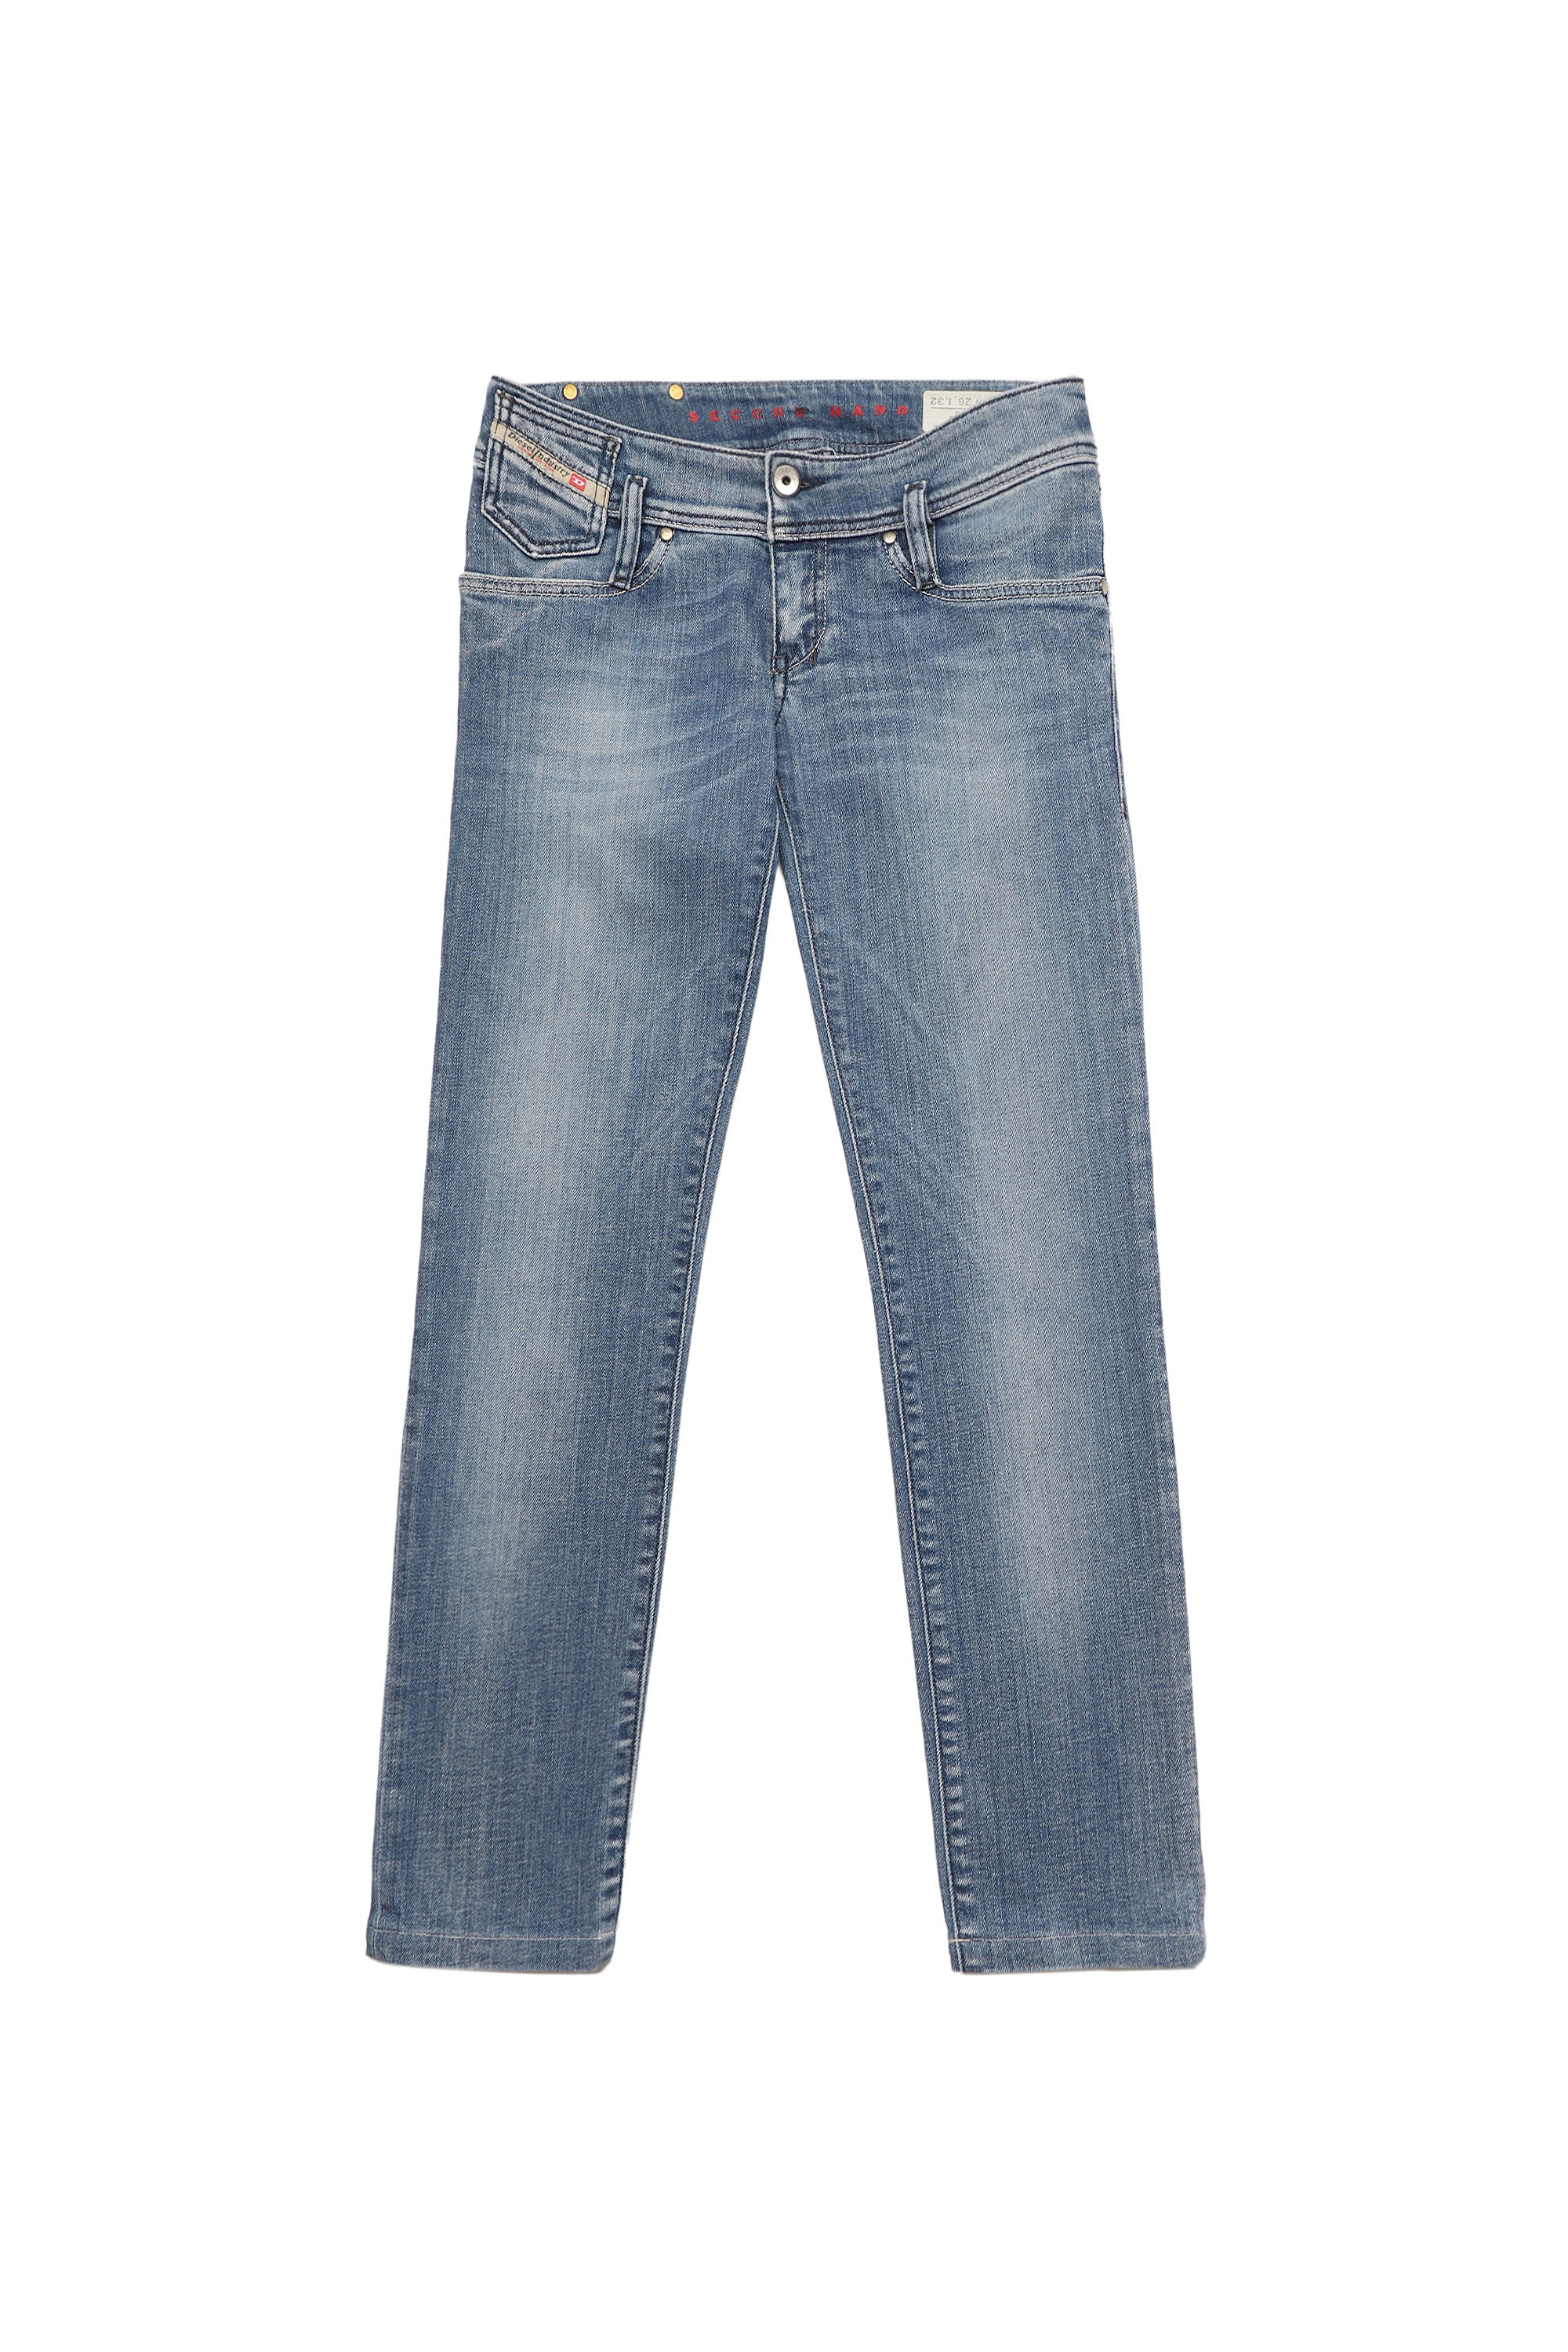 MATIC, Medium blue - Jeans